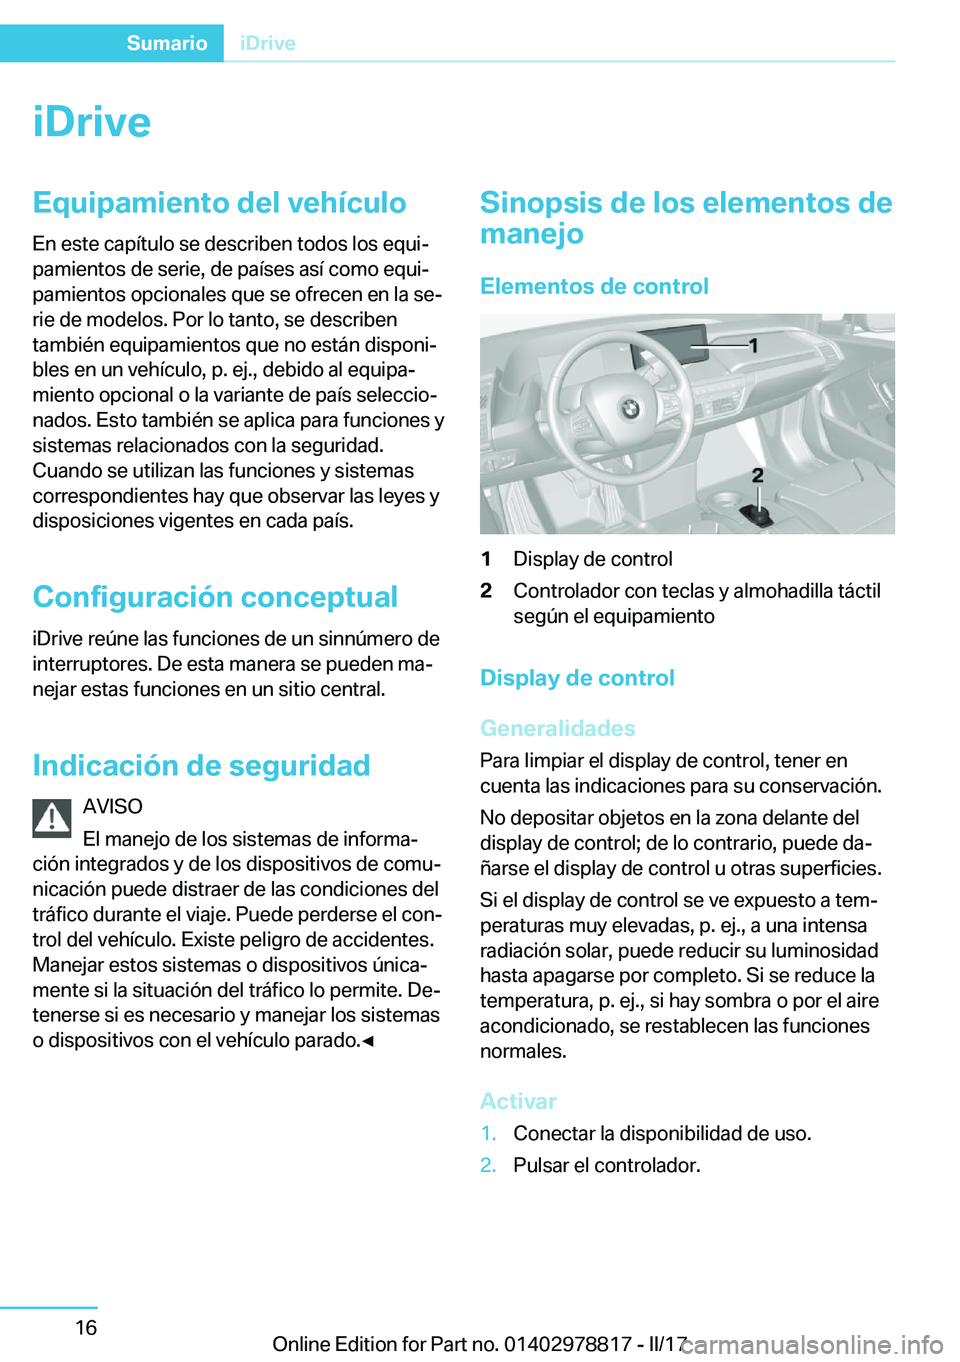 BMW I3 2017  Manuales de Empleo (in Spanish) �i�D�r�i�v�e�E�q�u�i�p�a�m�i�e�n�t�o��d�e�l��v�e�h�